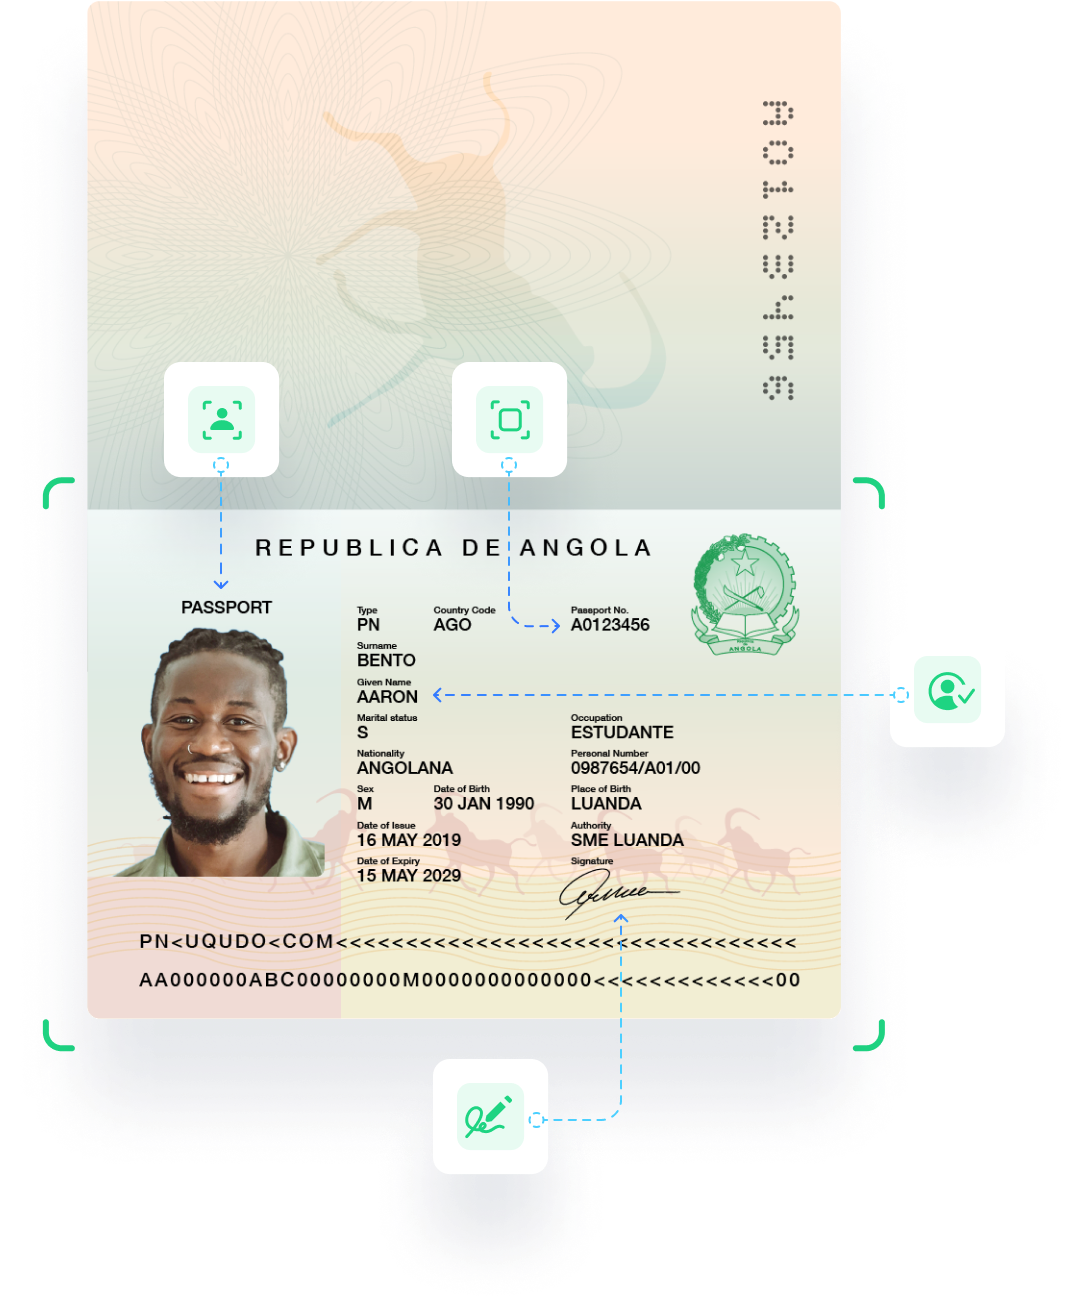 Passport digital ID verification services in Angola